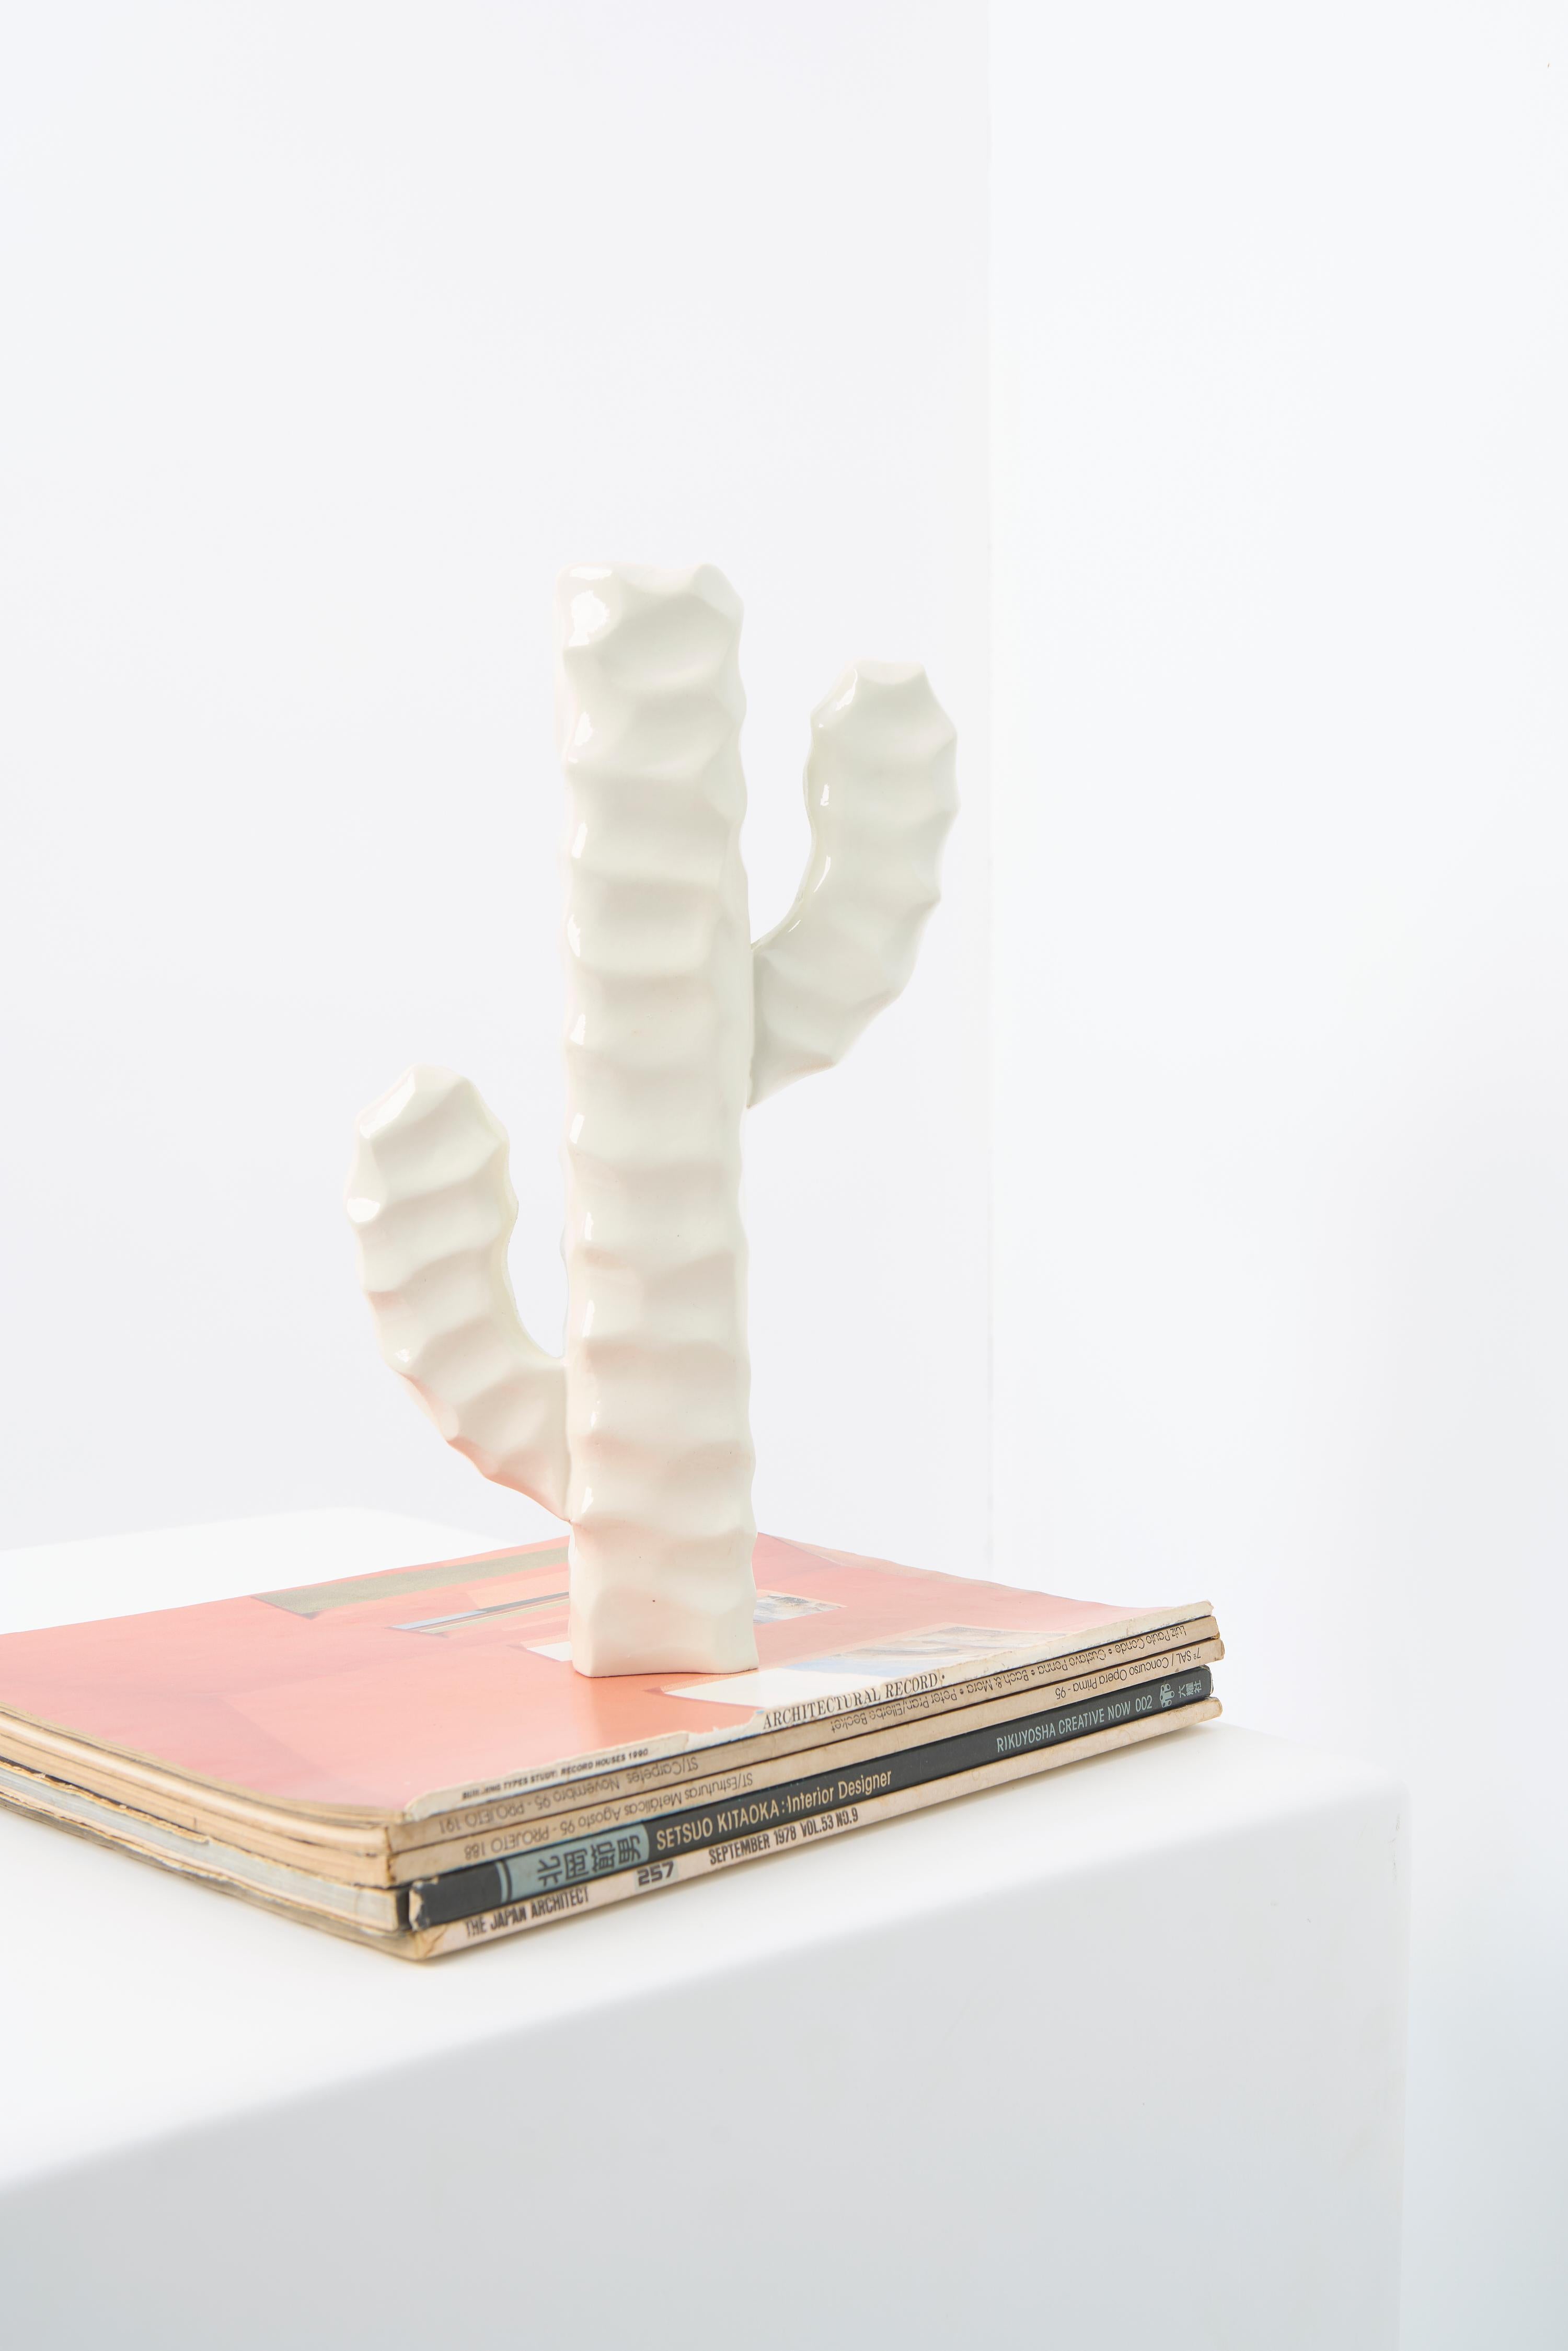 Brazilian Mandacaru Series, Wooden Cactus Table Sculpture For Sale